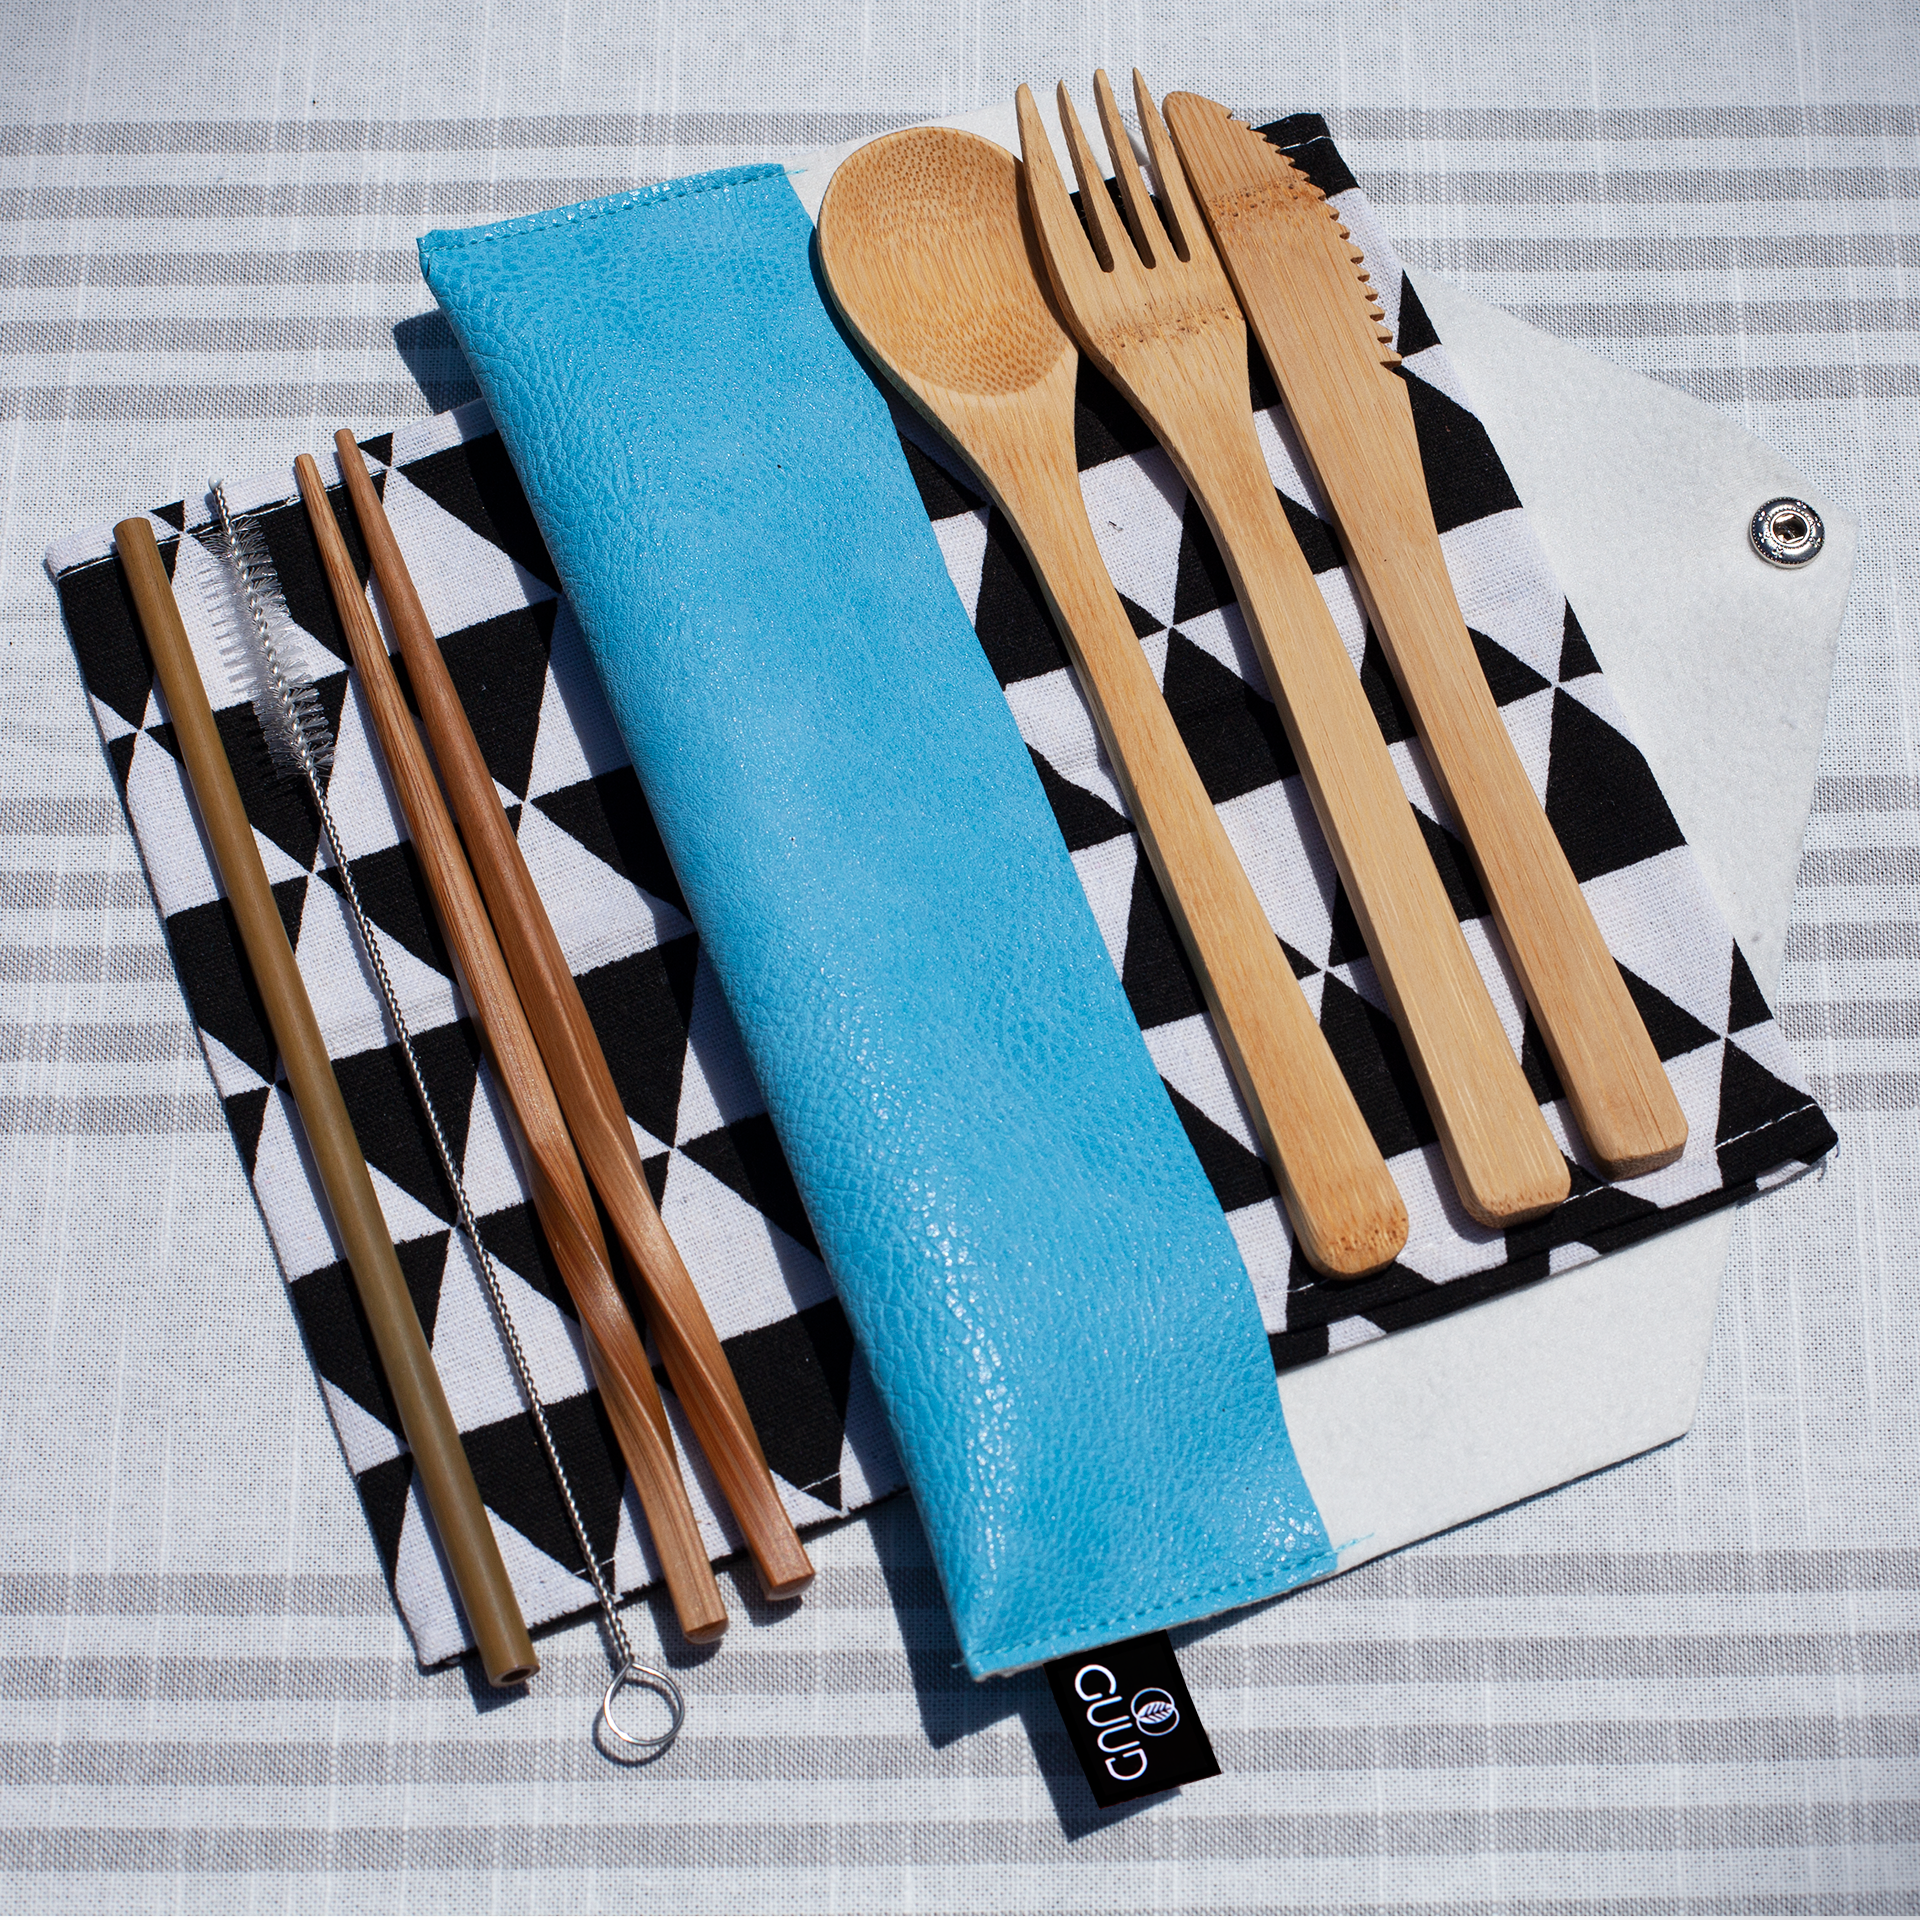 Travel Cutlery Set | Eco-Friendly Bamboo Utensils